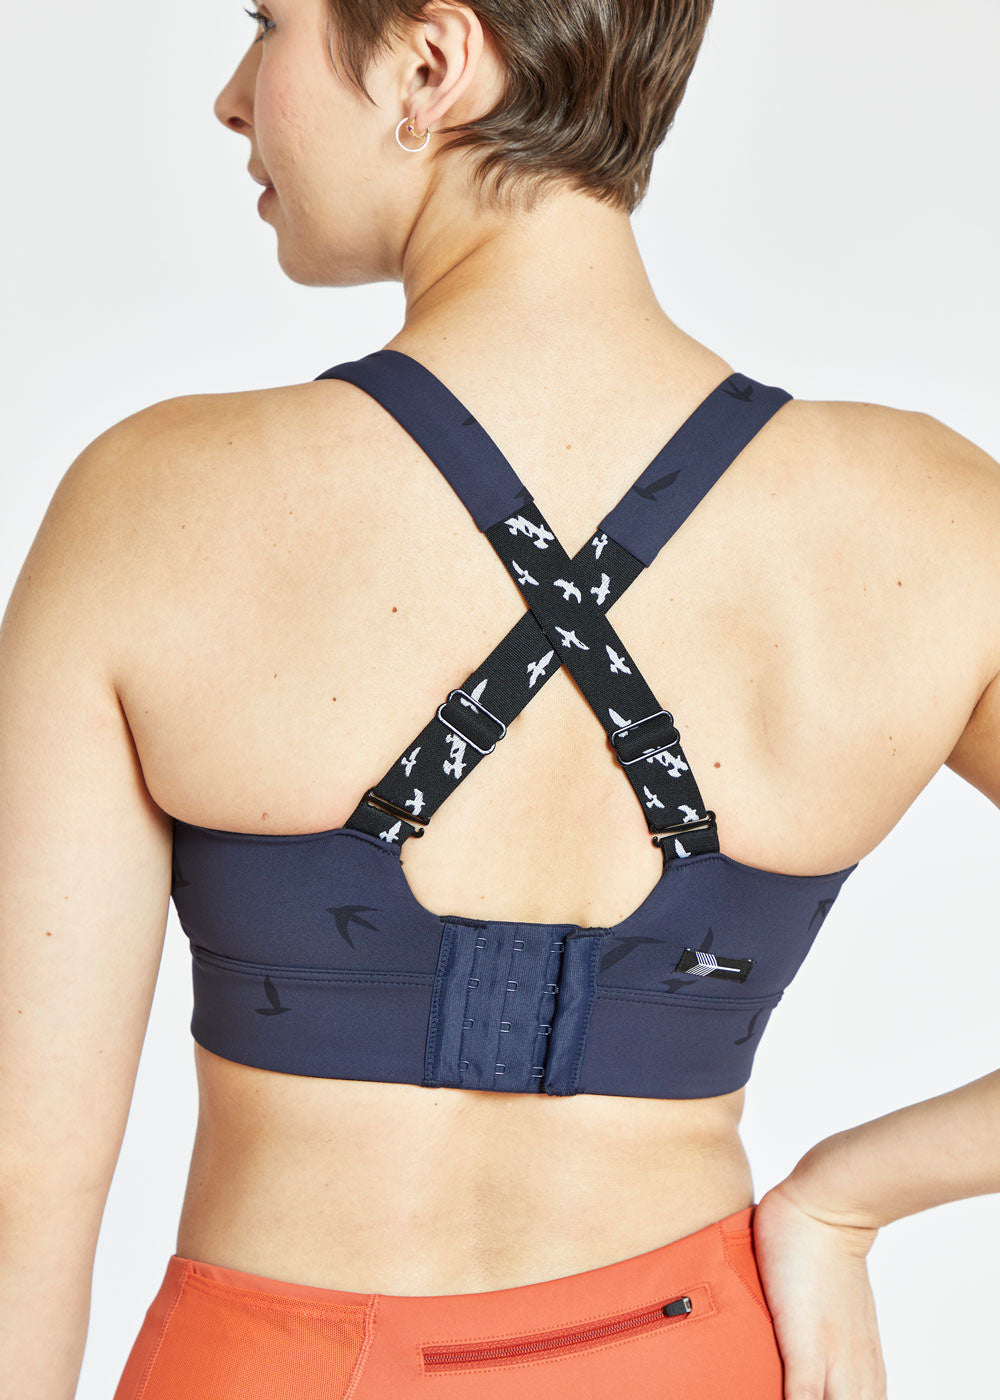 Queenral Super Push Up Bras Bralette For Women Underwear Lingerie